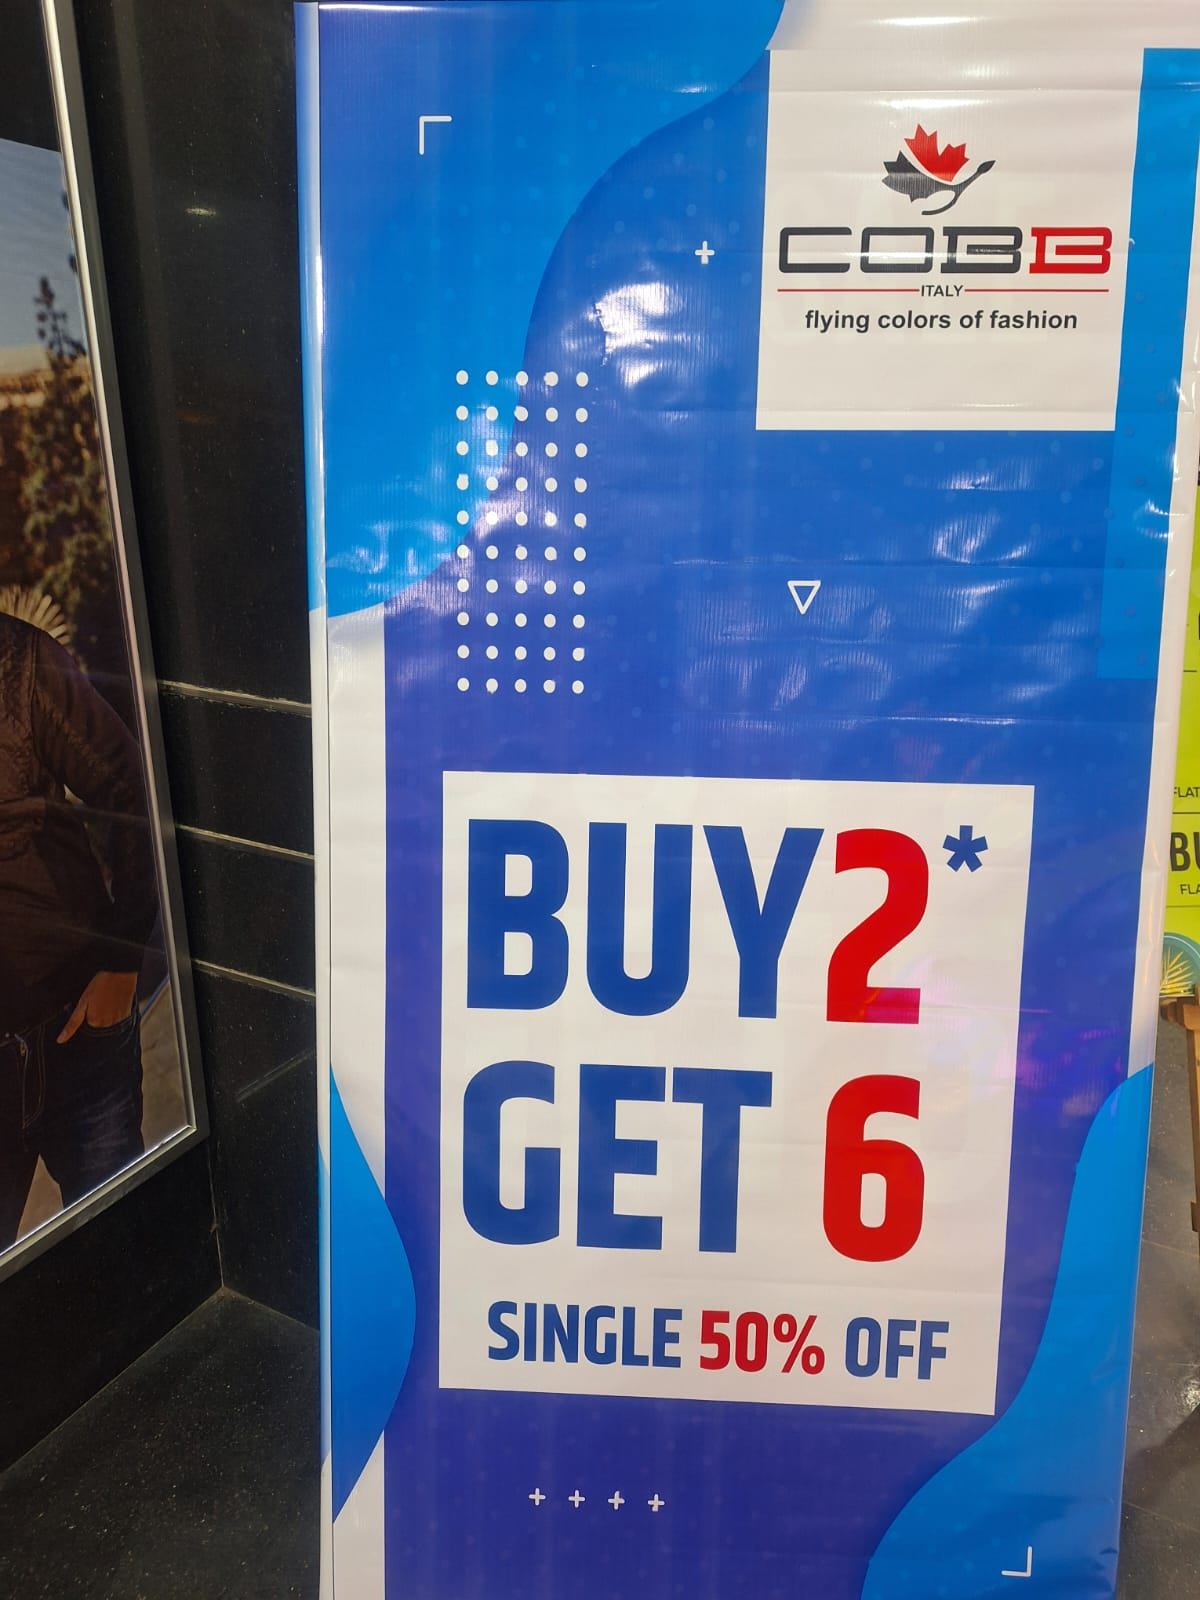 BUY 2 GET 6, SINGLE 50% OFF Deal @COBB, Ashima Mall, Bhopal